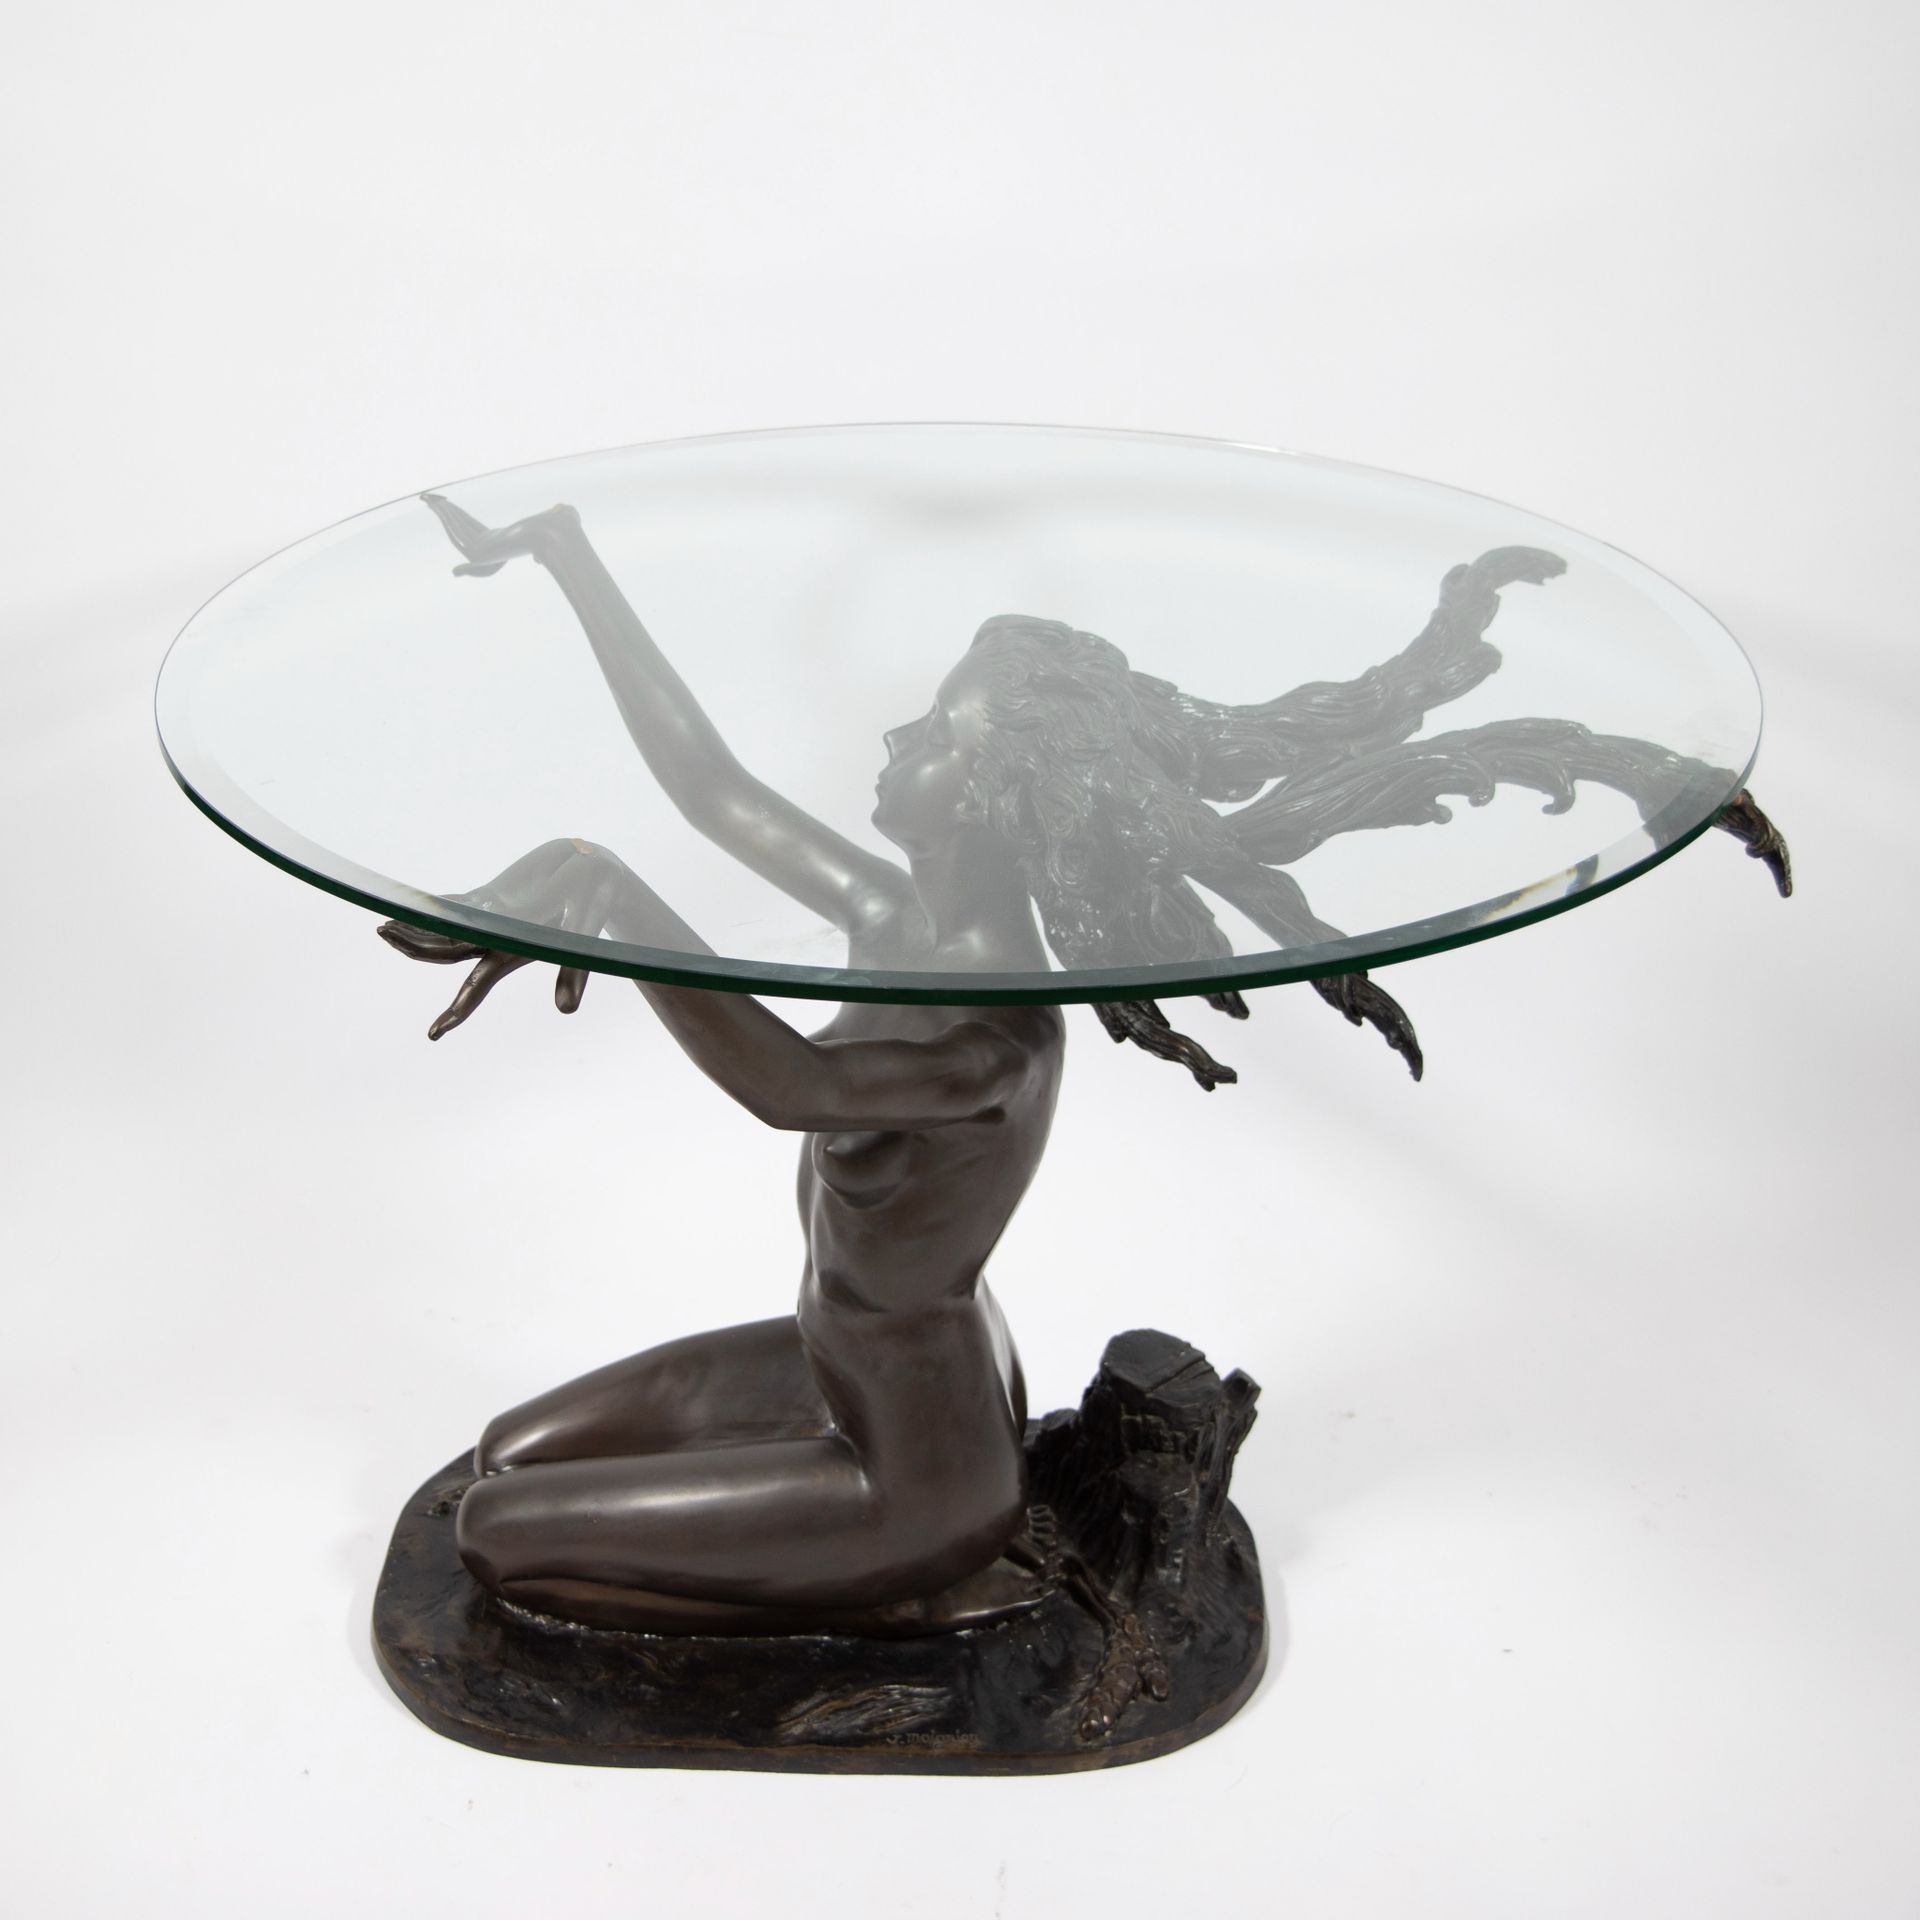 Null 签名为J-Moignier的带切割玻璃桌面的复古桌子，上面有一个坐着的裸体。
签名为 "J Moignier "的复古玻璃桌，上面有一个坐着的裸体。
&hellip;